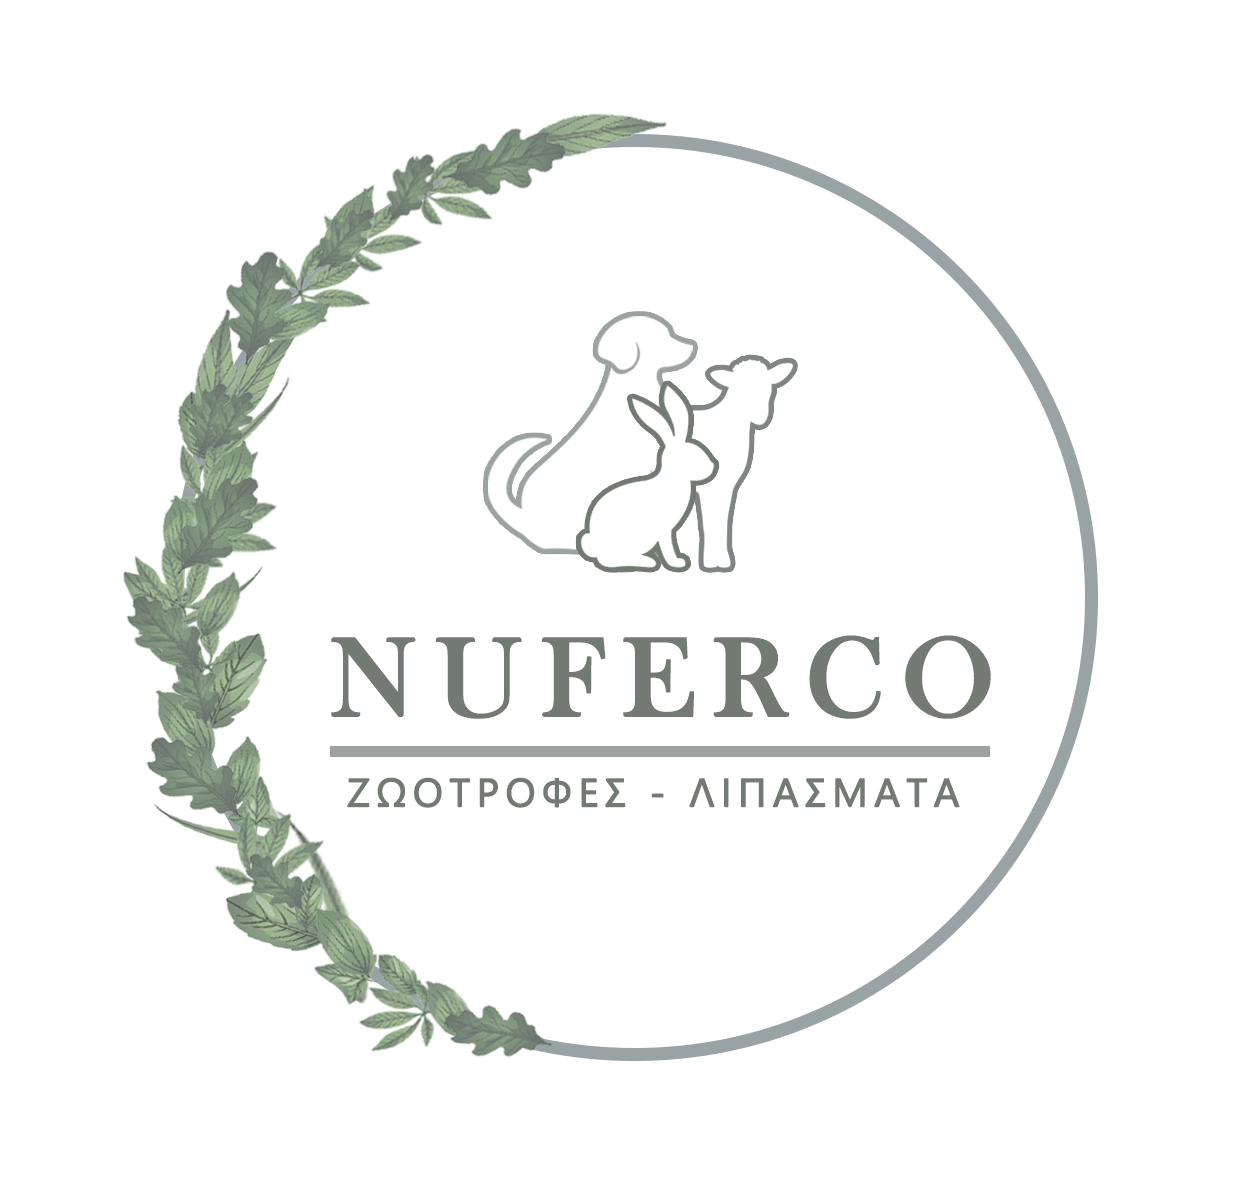 Nuferco Logo | Ευβοϊκή Ζωοτροφική